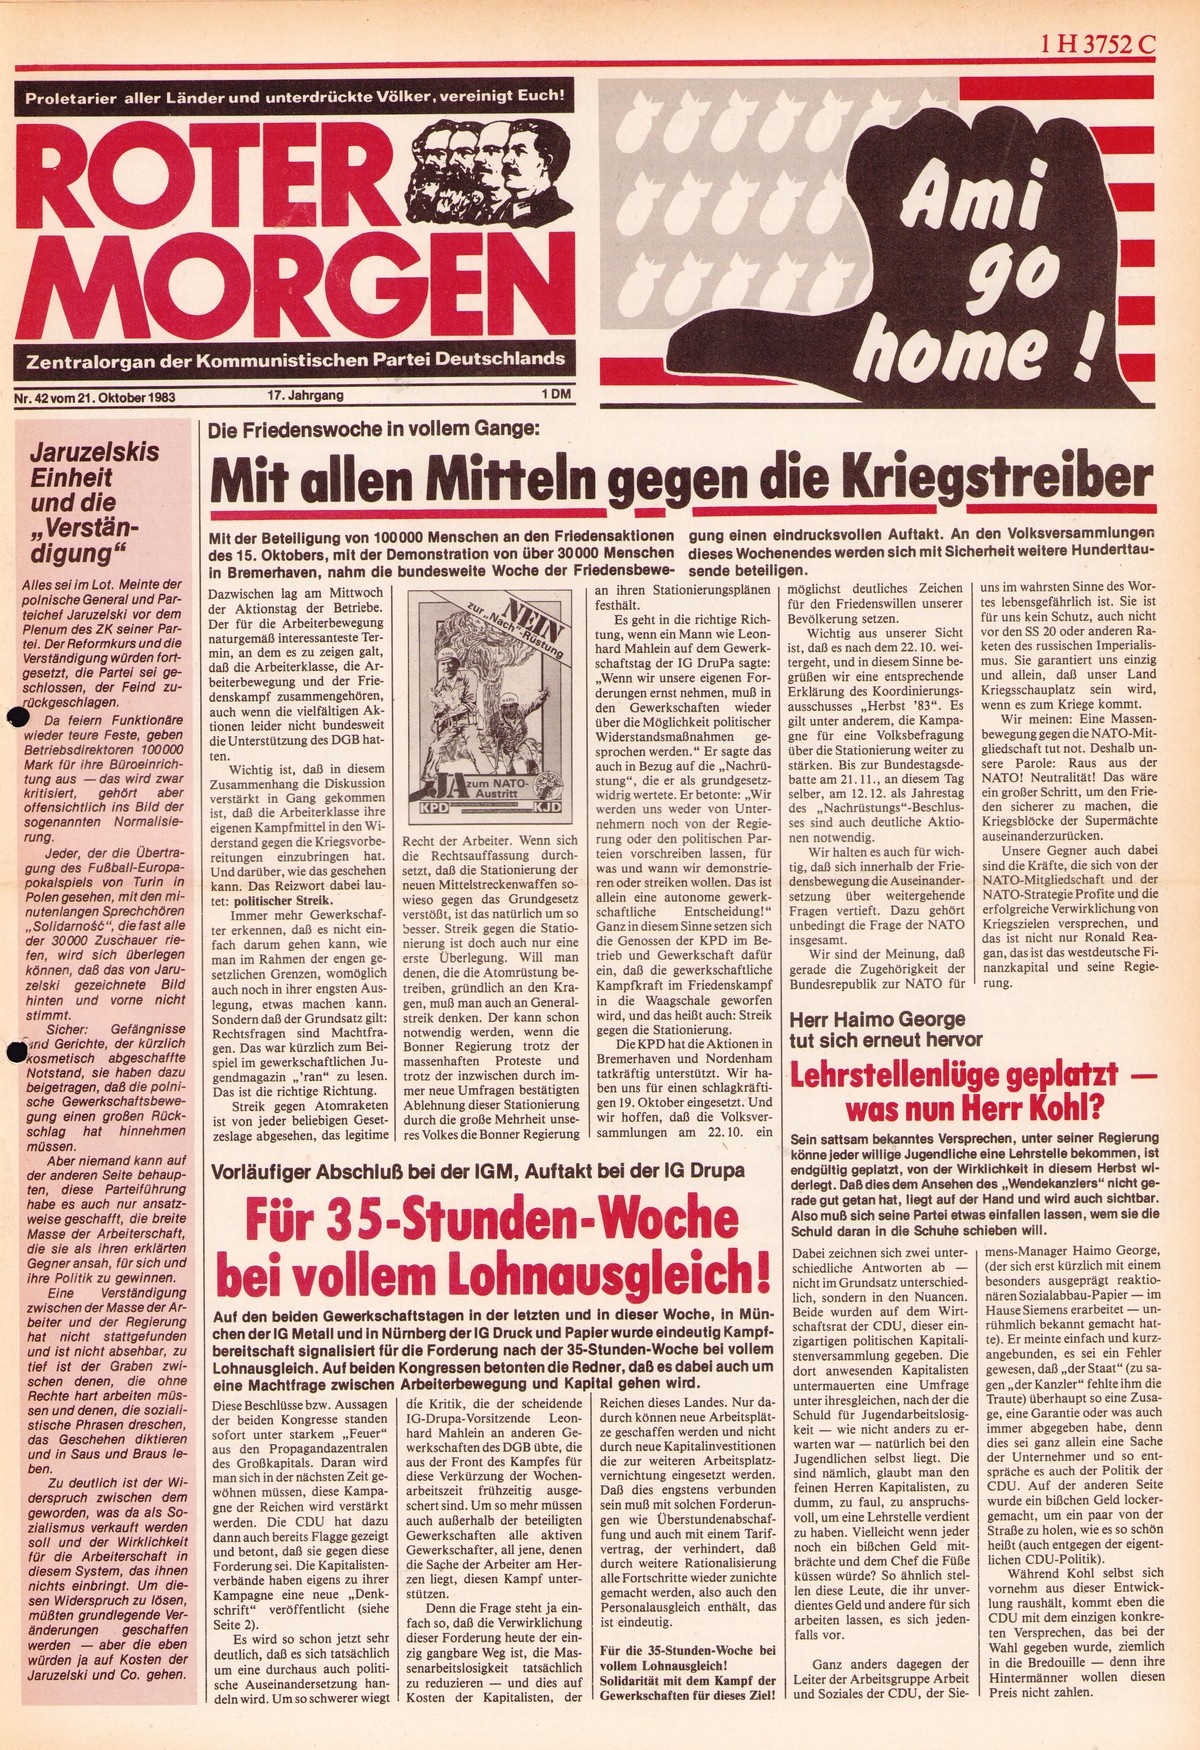 Roter Morgen, 17. Jg., 21. Oktober 1983, Nr. 42, Seite 1